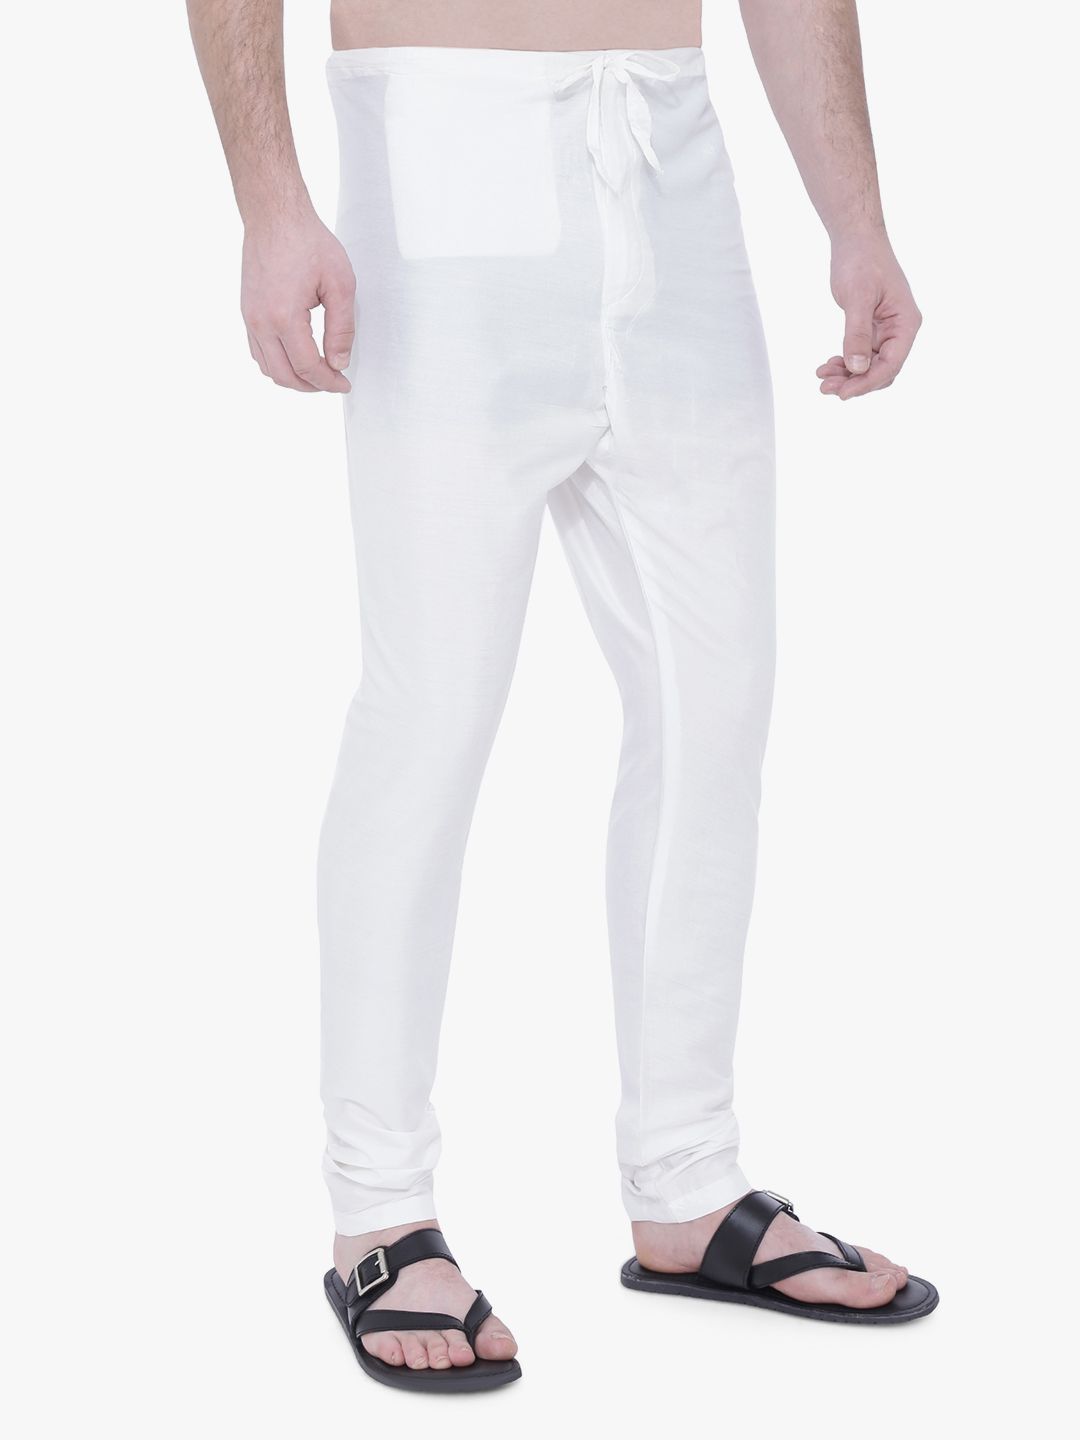 Men Cotton Pajama Long Pants Lounge Pocket Sleep Bottom Sleepwear Trousers  S-3XL | eBay